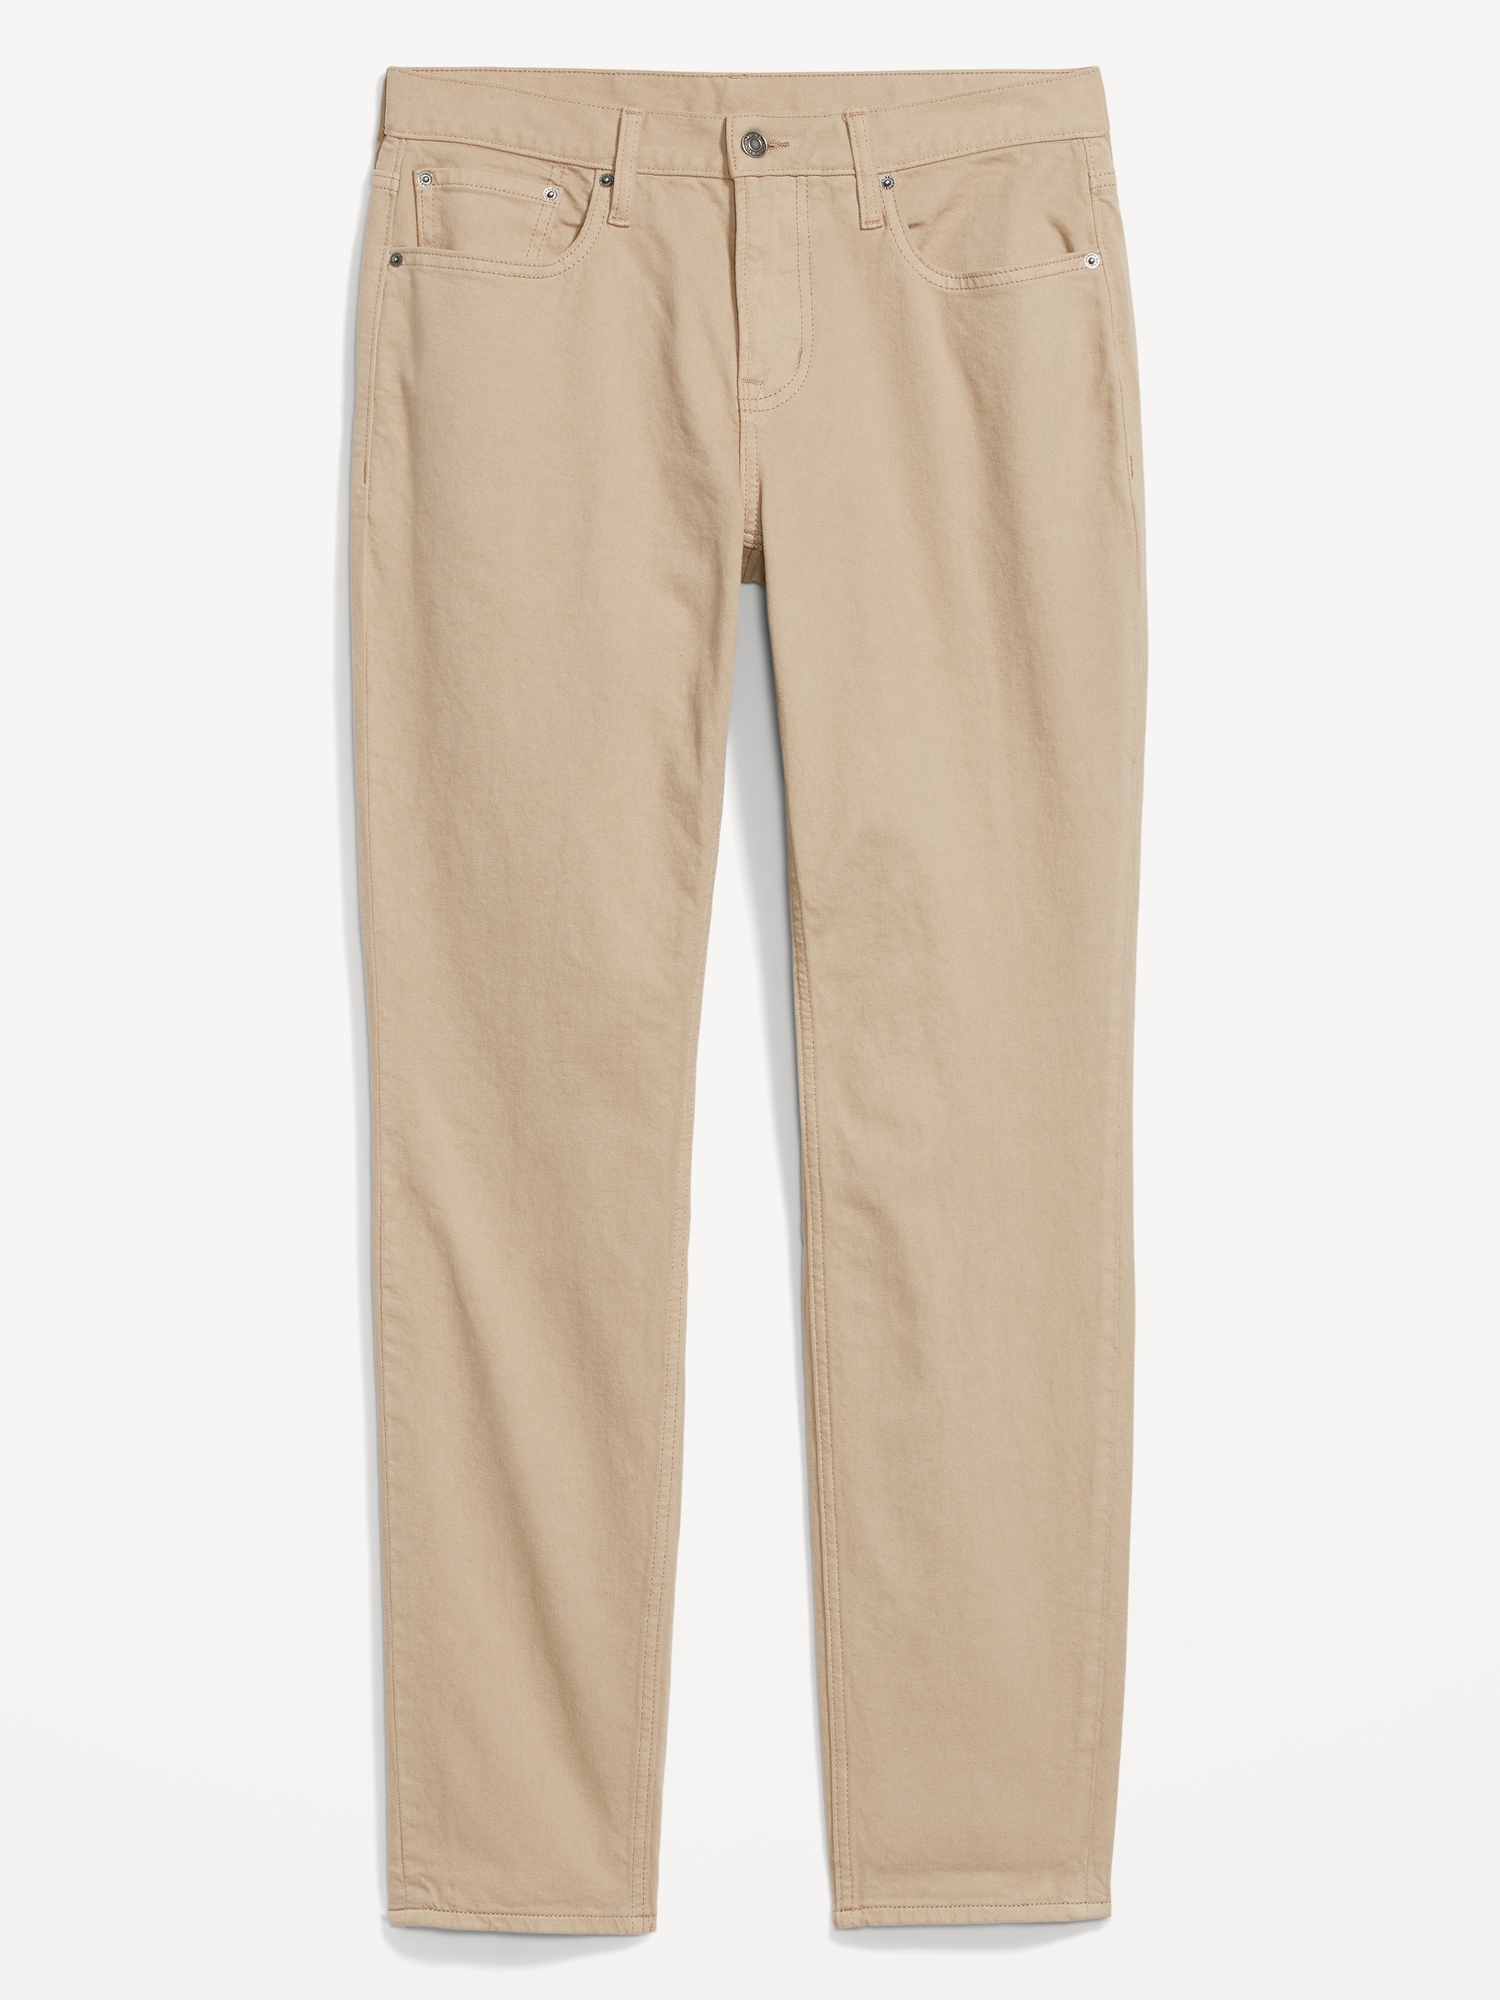 Athletic Taper Five-Pocket Pants | Old Navy